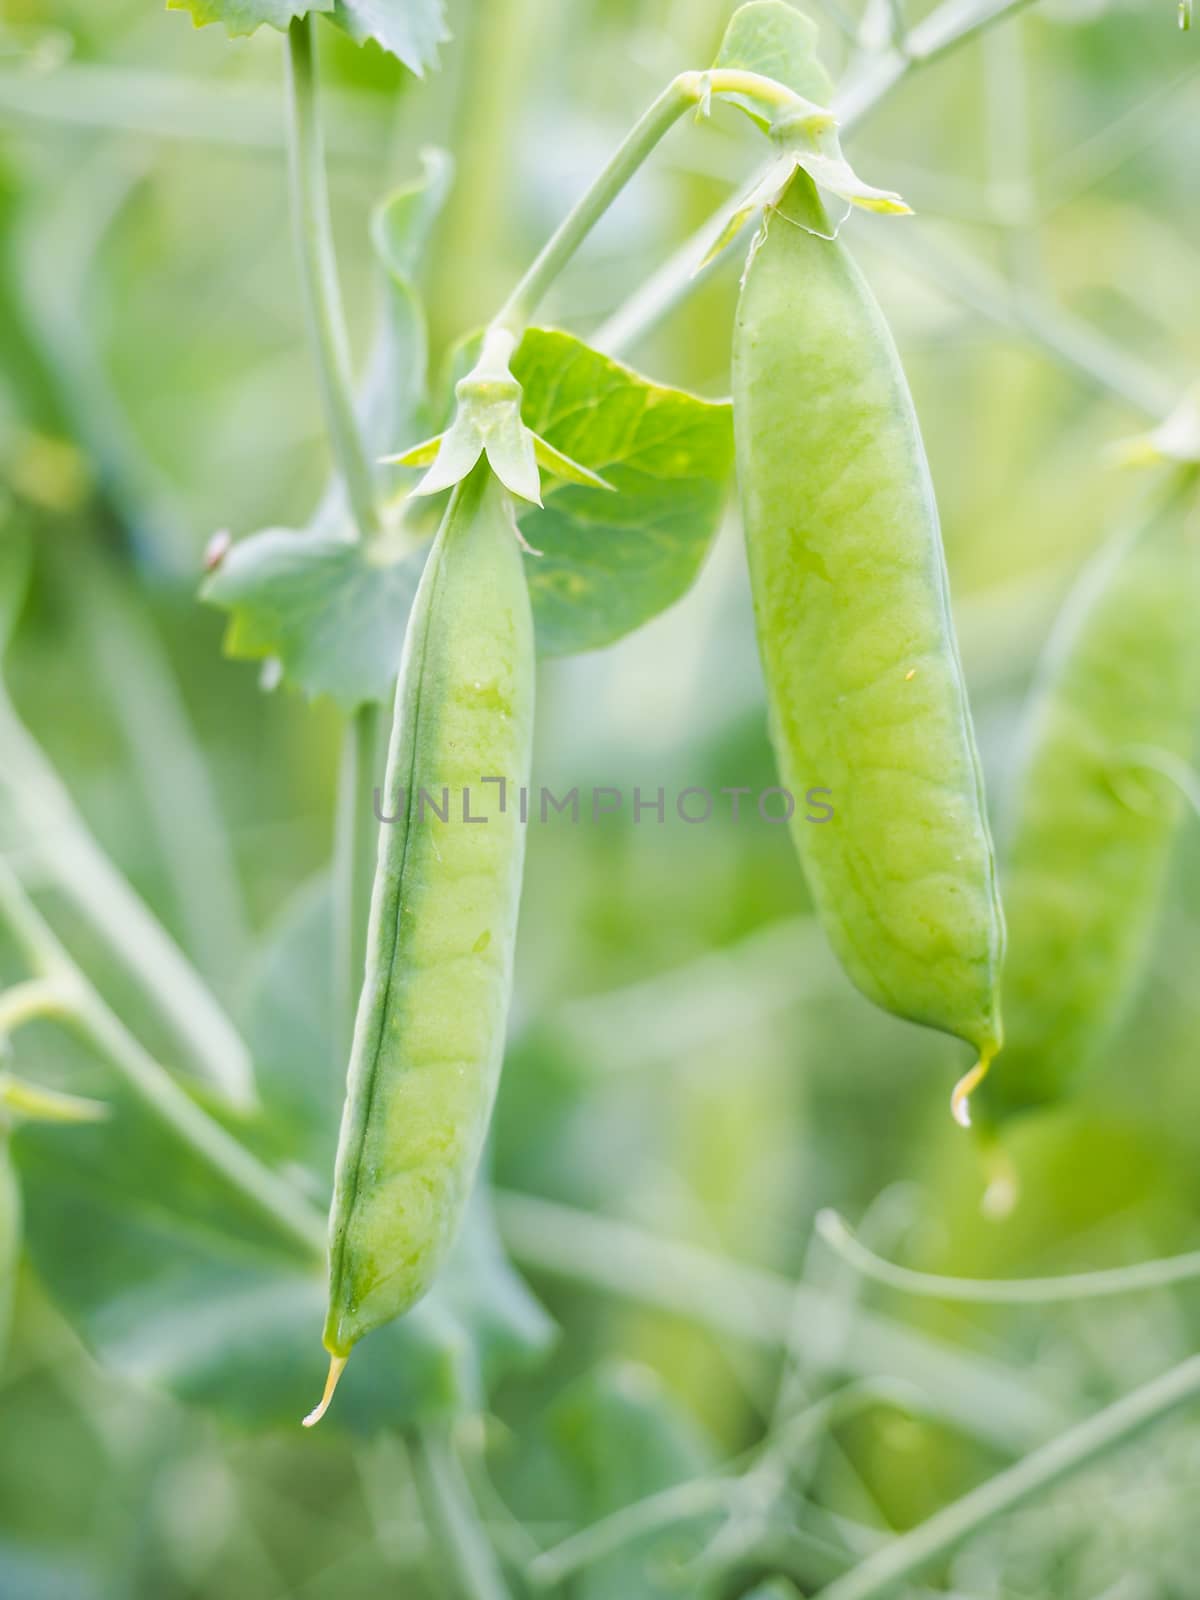 Seed pods of garden peas, pisum sativum, right before harvesting by Arvebettum